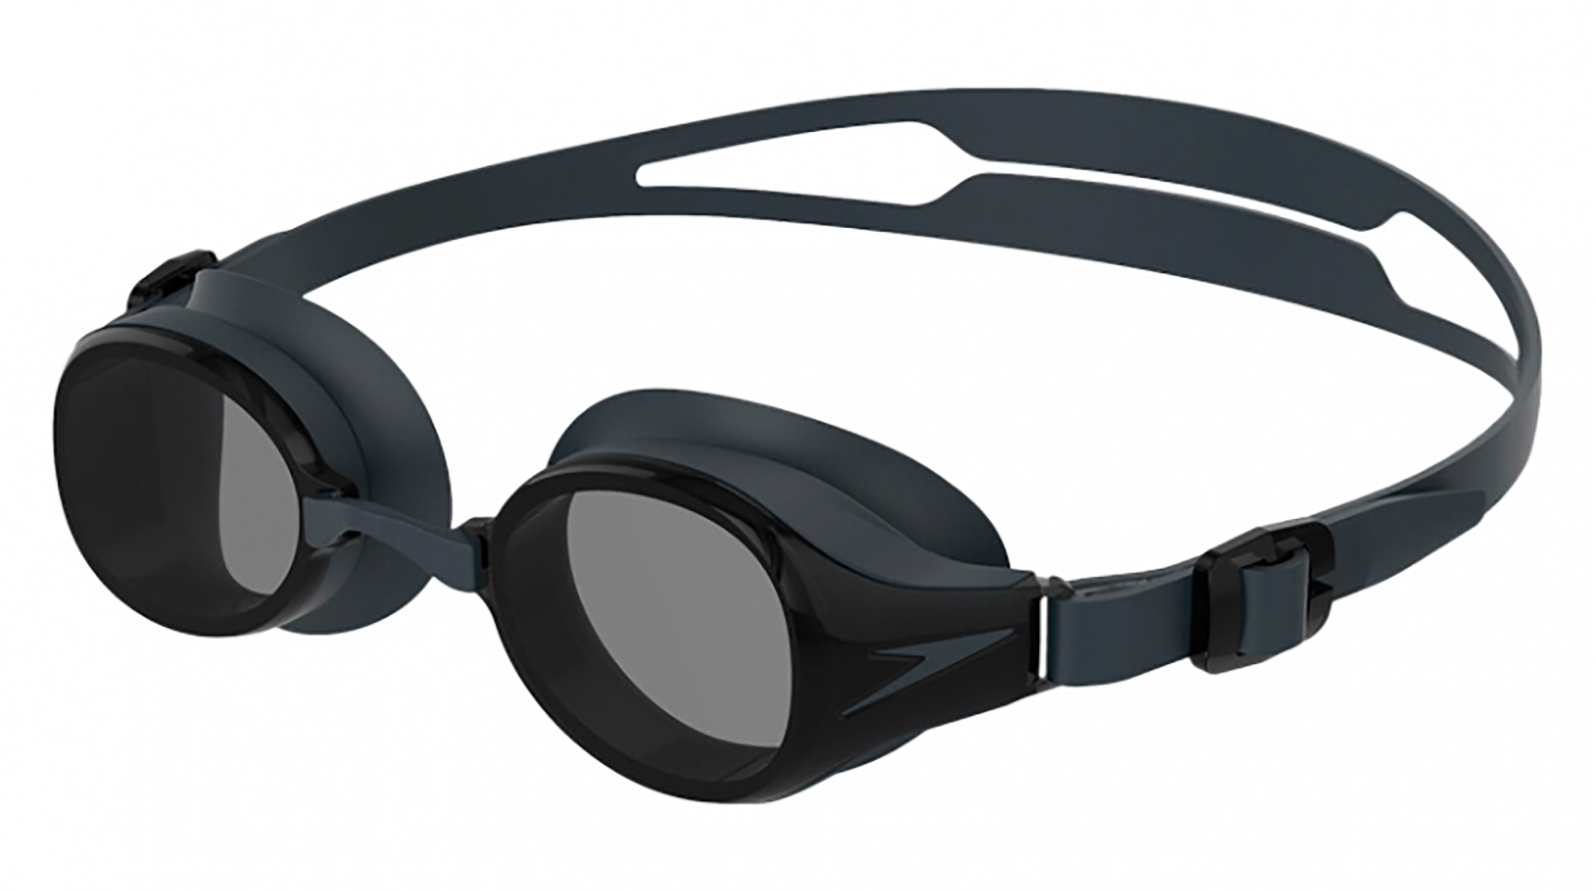 Speedo Очки для плавания Hydropure Optical F808 -3,0 speedo очки для плавания hydropure optical f809 3 5